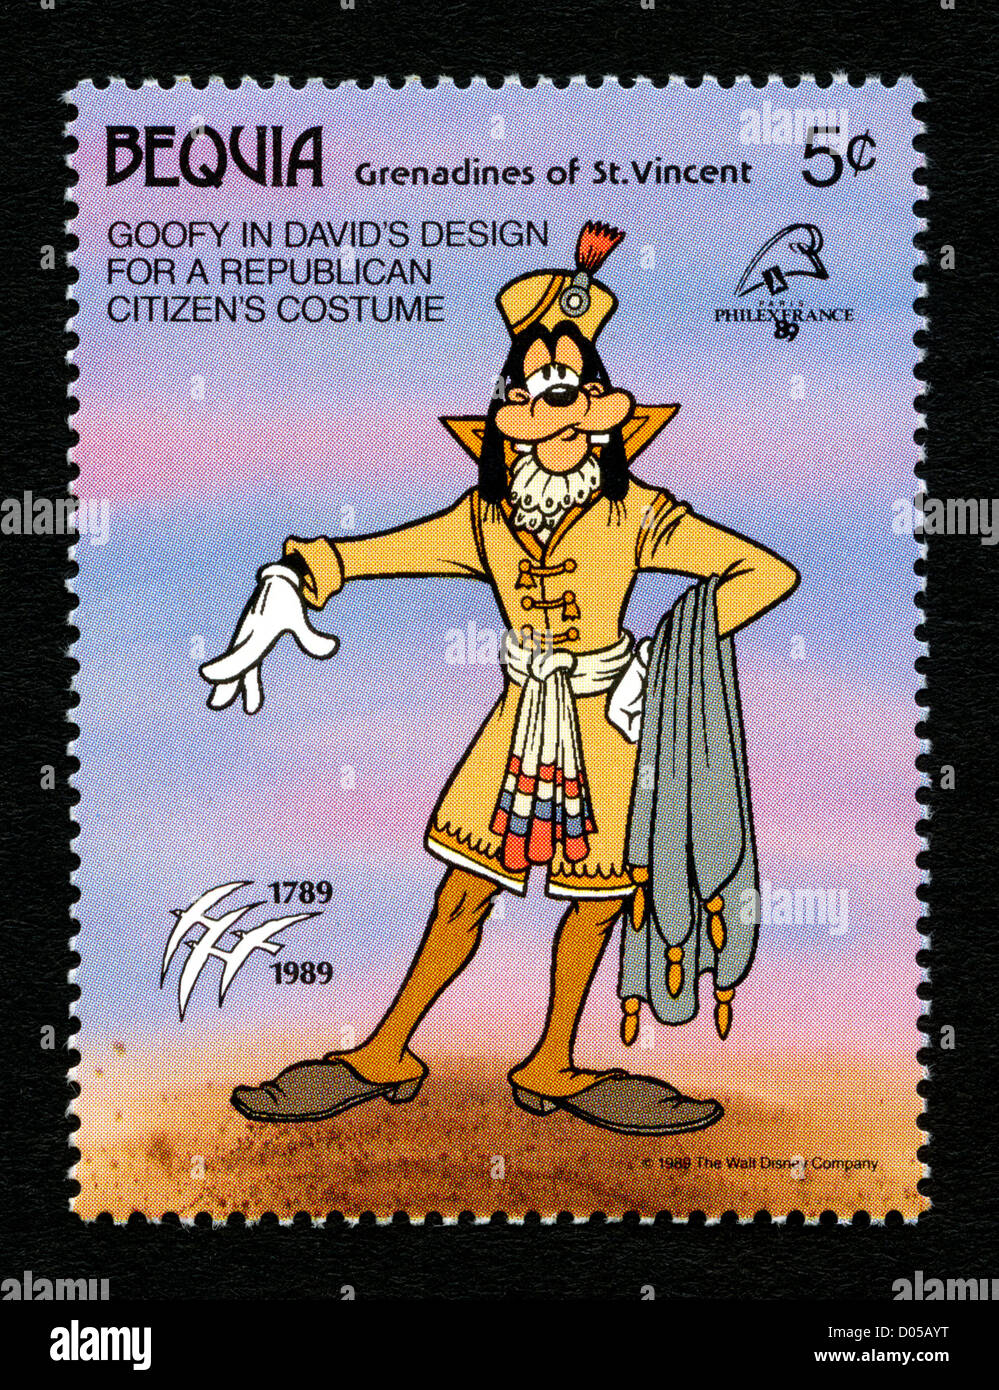 St Vincent Grenadines postage stamp depicting Disney cartoon character Stock Photo